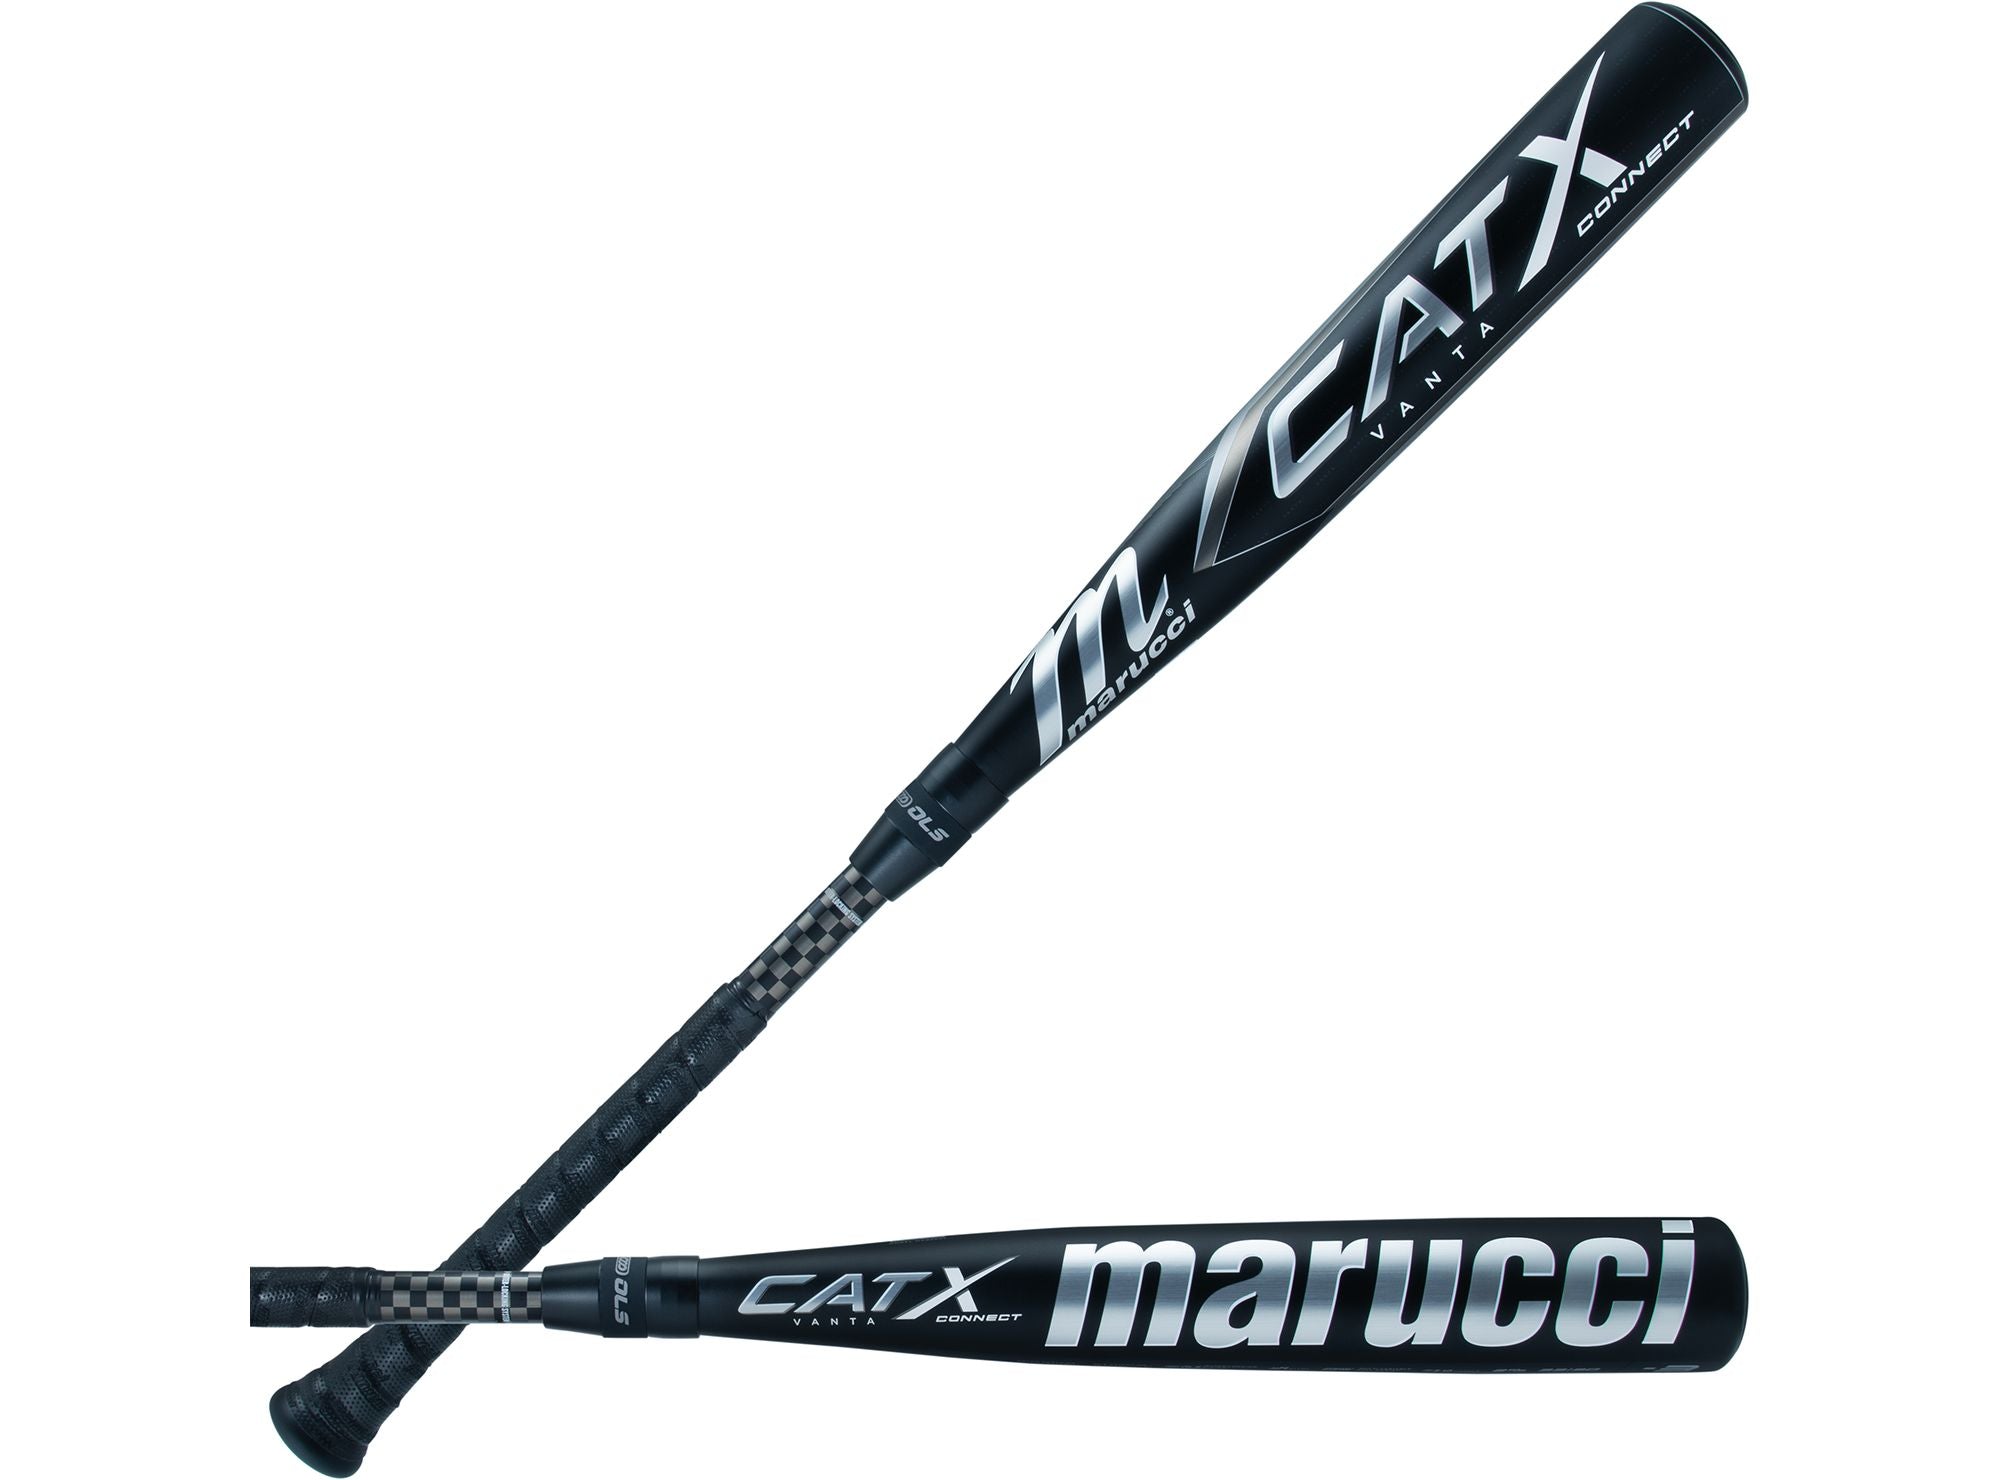 Marucci CATX Vanta Connect (-3) BBCOR Baseball Bat: MCBCCXV